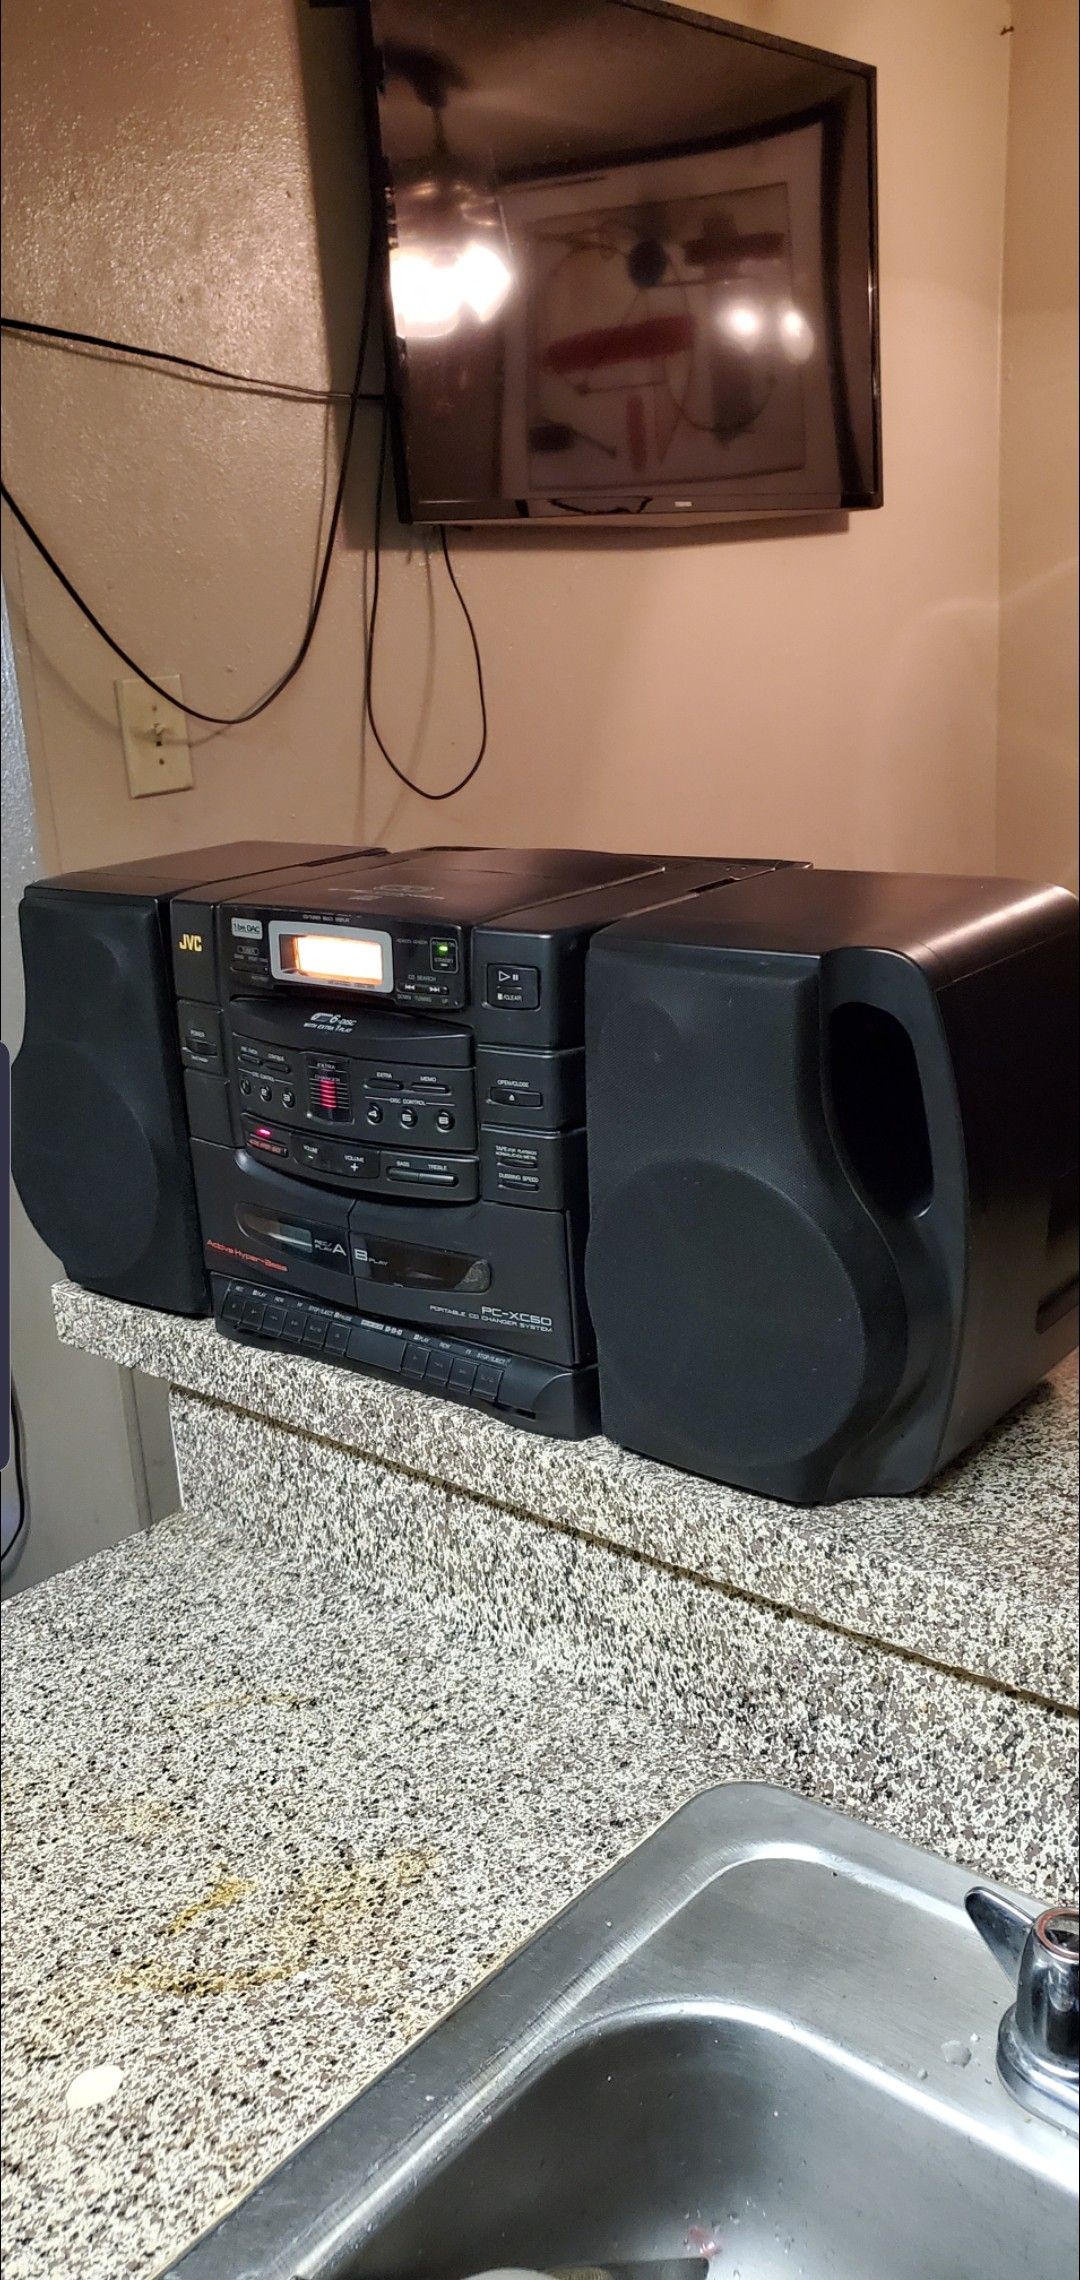 6 cd changer jvc portable stereo system player.